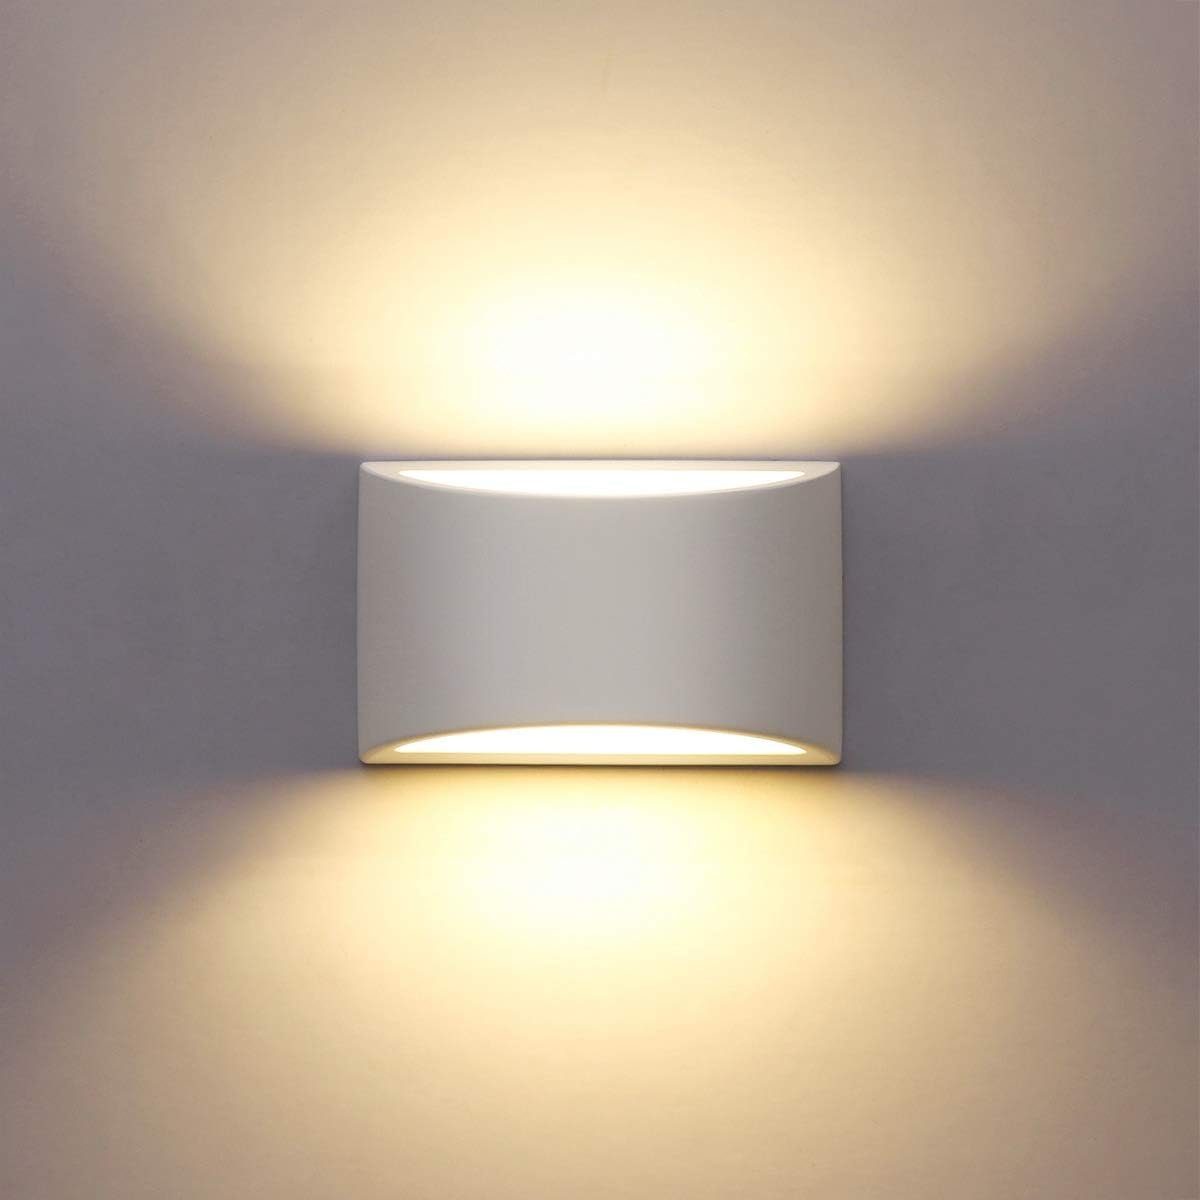 DOPWii Wandleuchte Wandleuchte,moderne LED-Wandlampe,5W Gipsleuchte,warmweißes Wandlicht | Wandleuchten